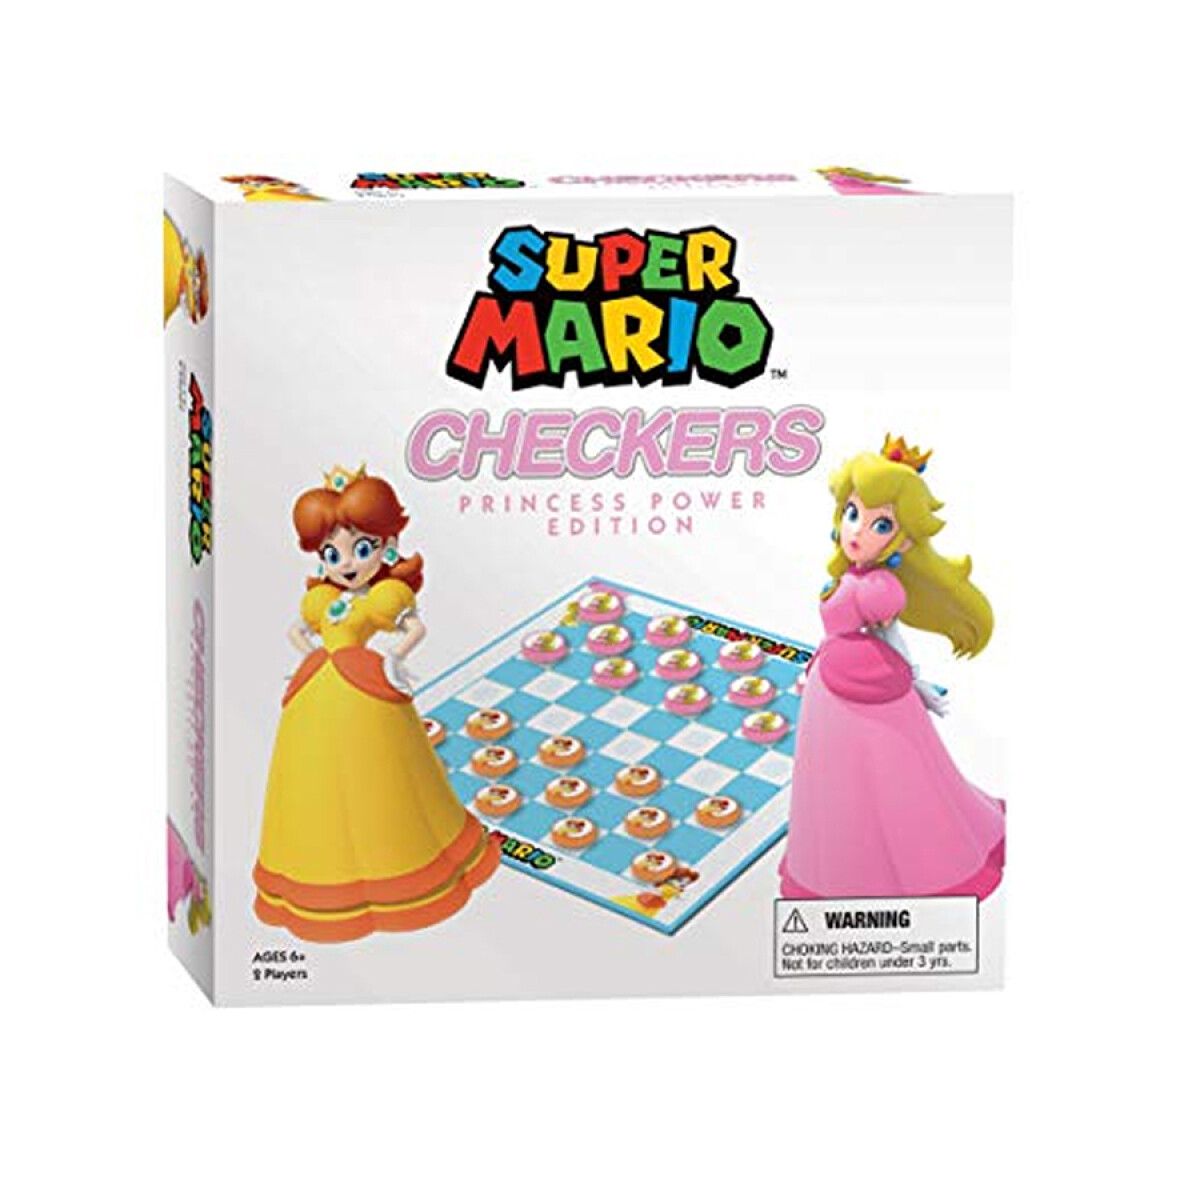 Super Mario Checkers [Princess Power Edition] 